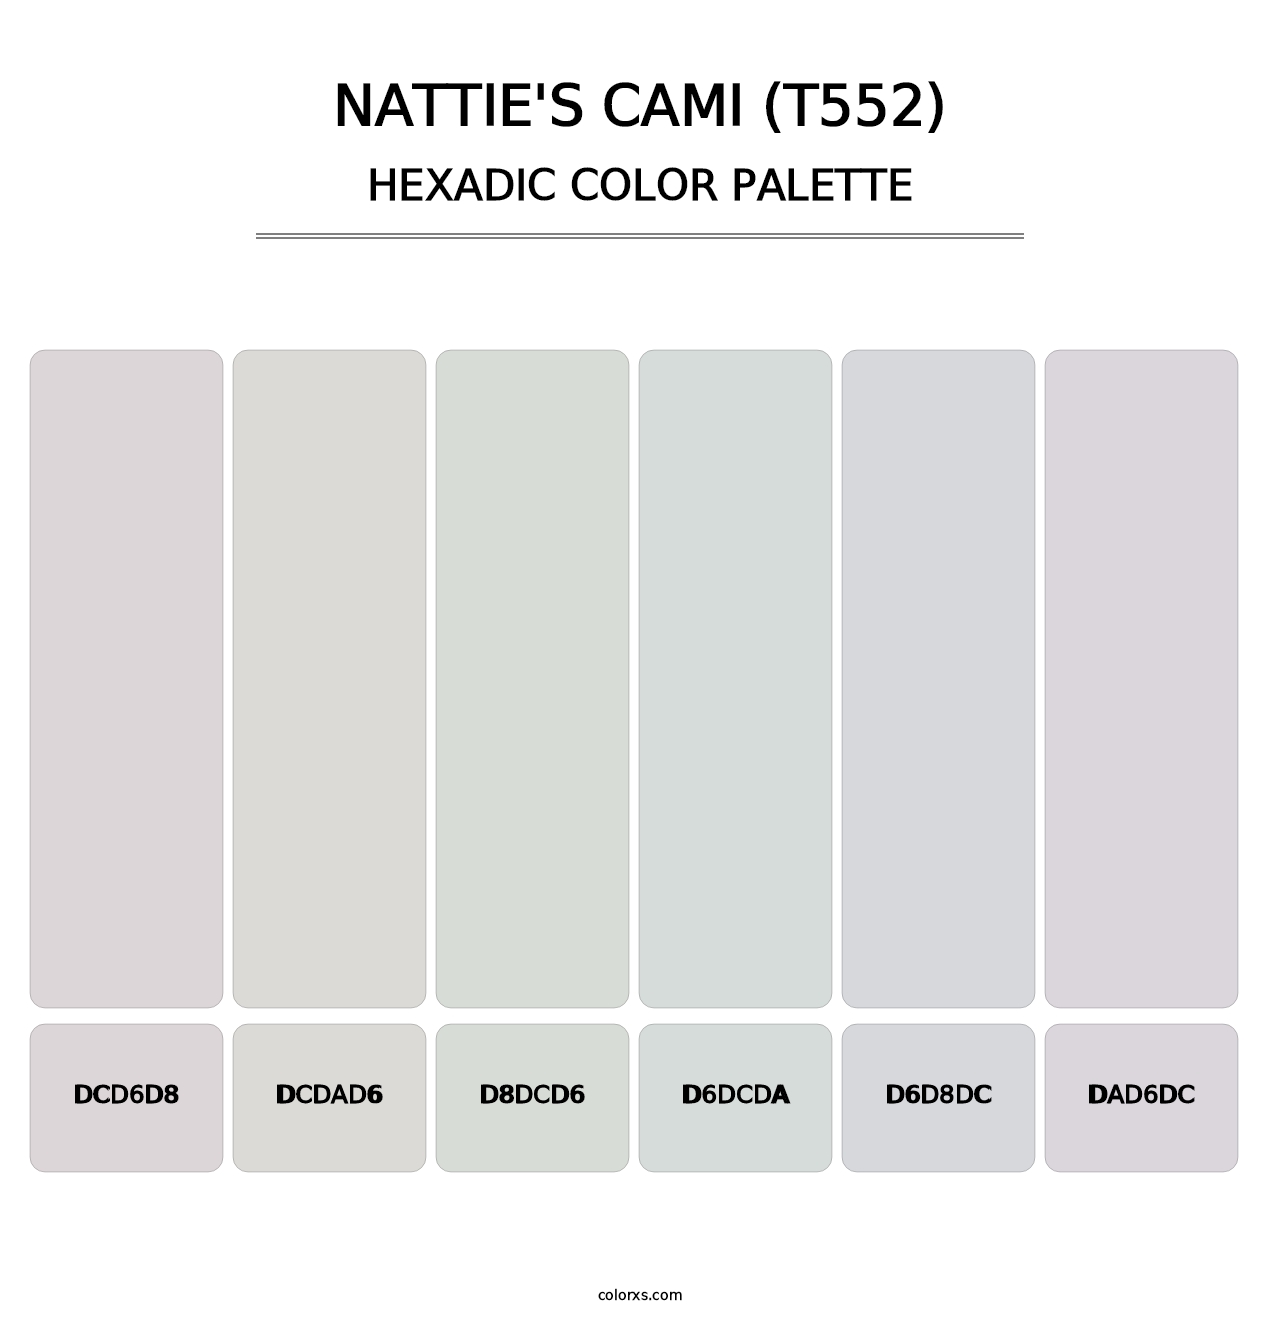 Nattie's Cami (T552) - Hexadic Color Palette